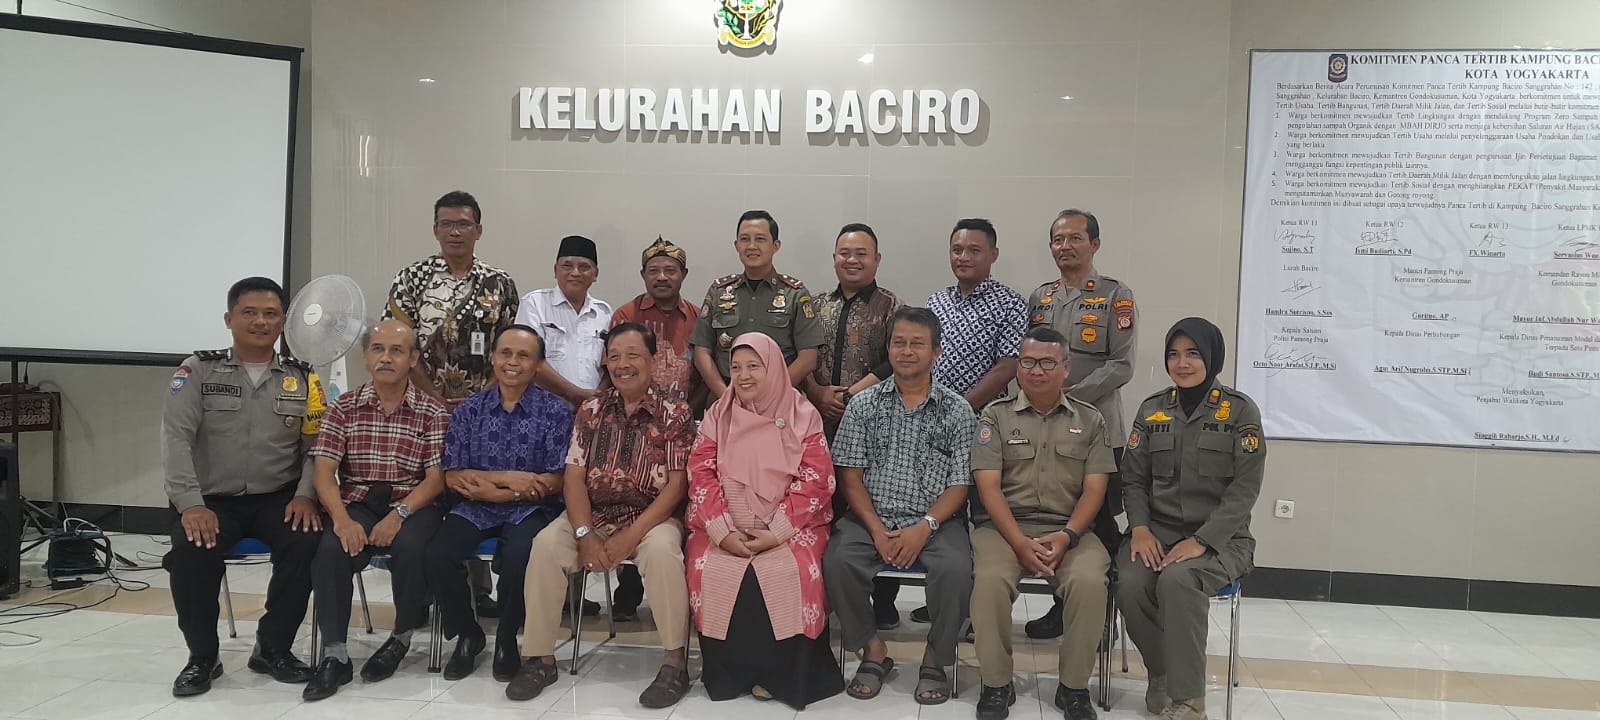 Deklarasi Kampung Panca Tertib Kampung Baciro Sanggrahan, Tertib Lingkungan Menjadi Prioritas Utama.